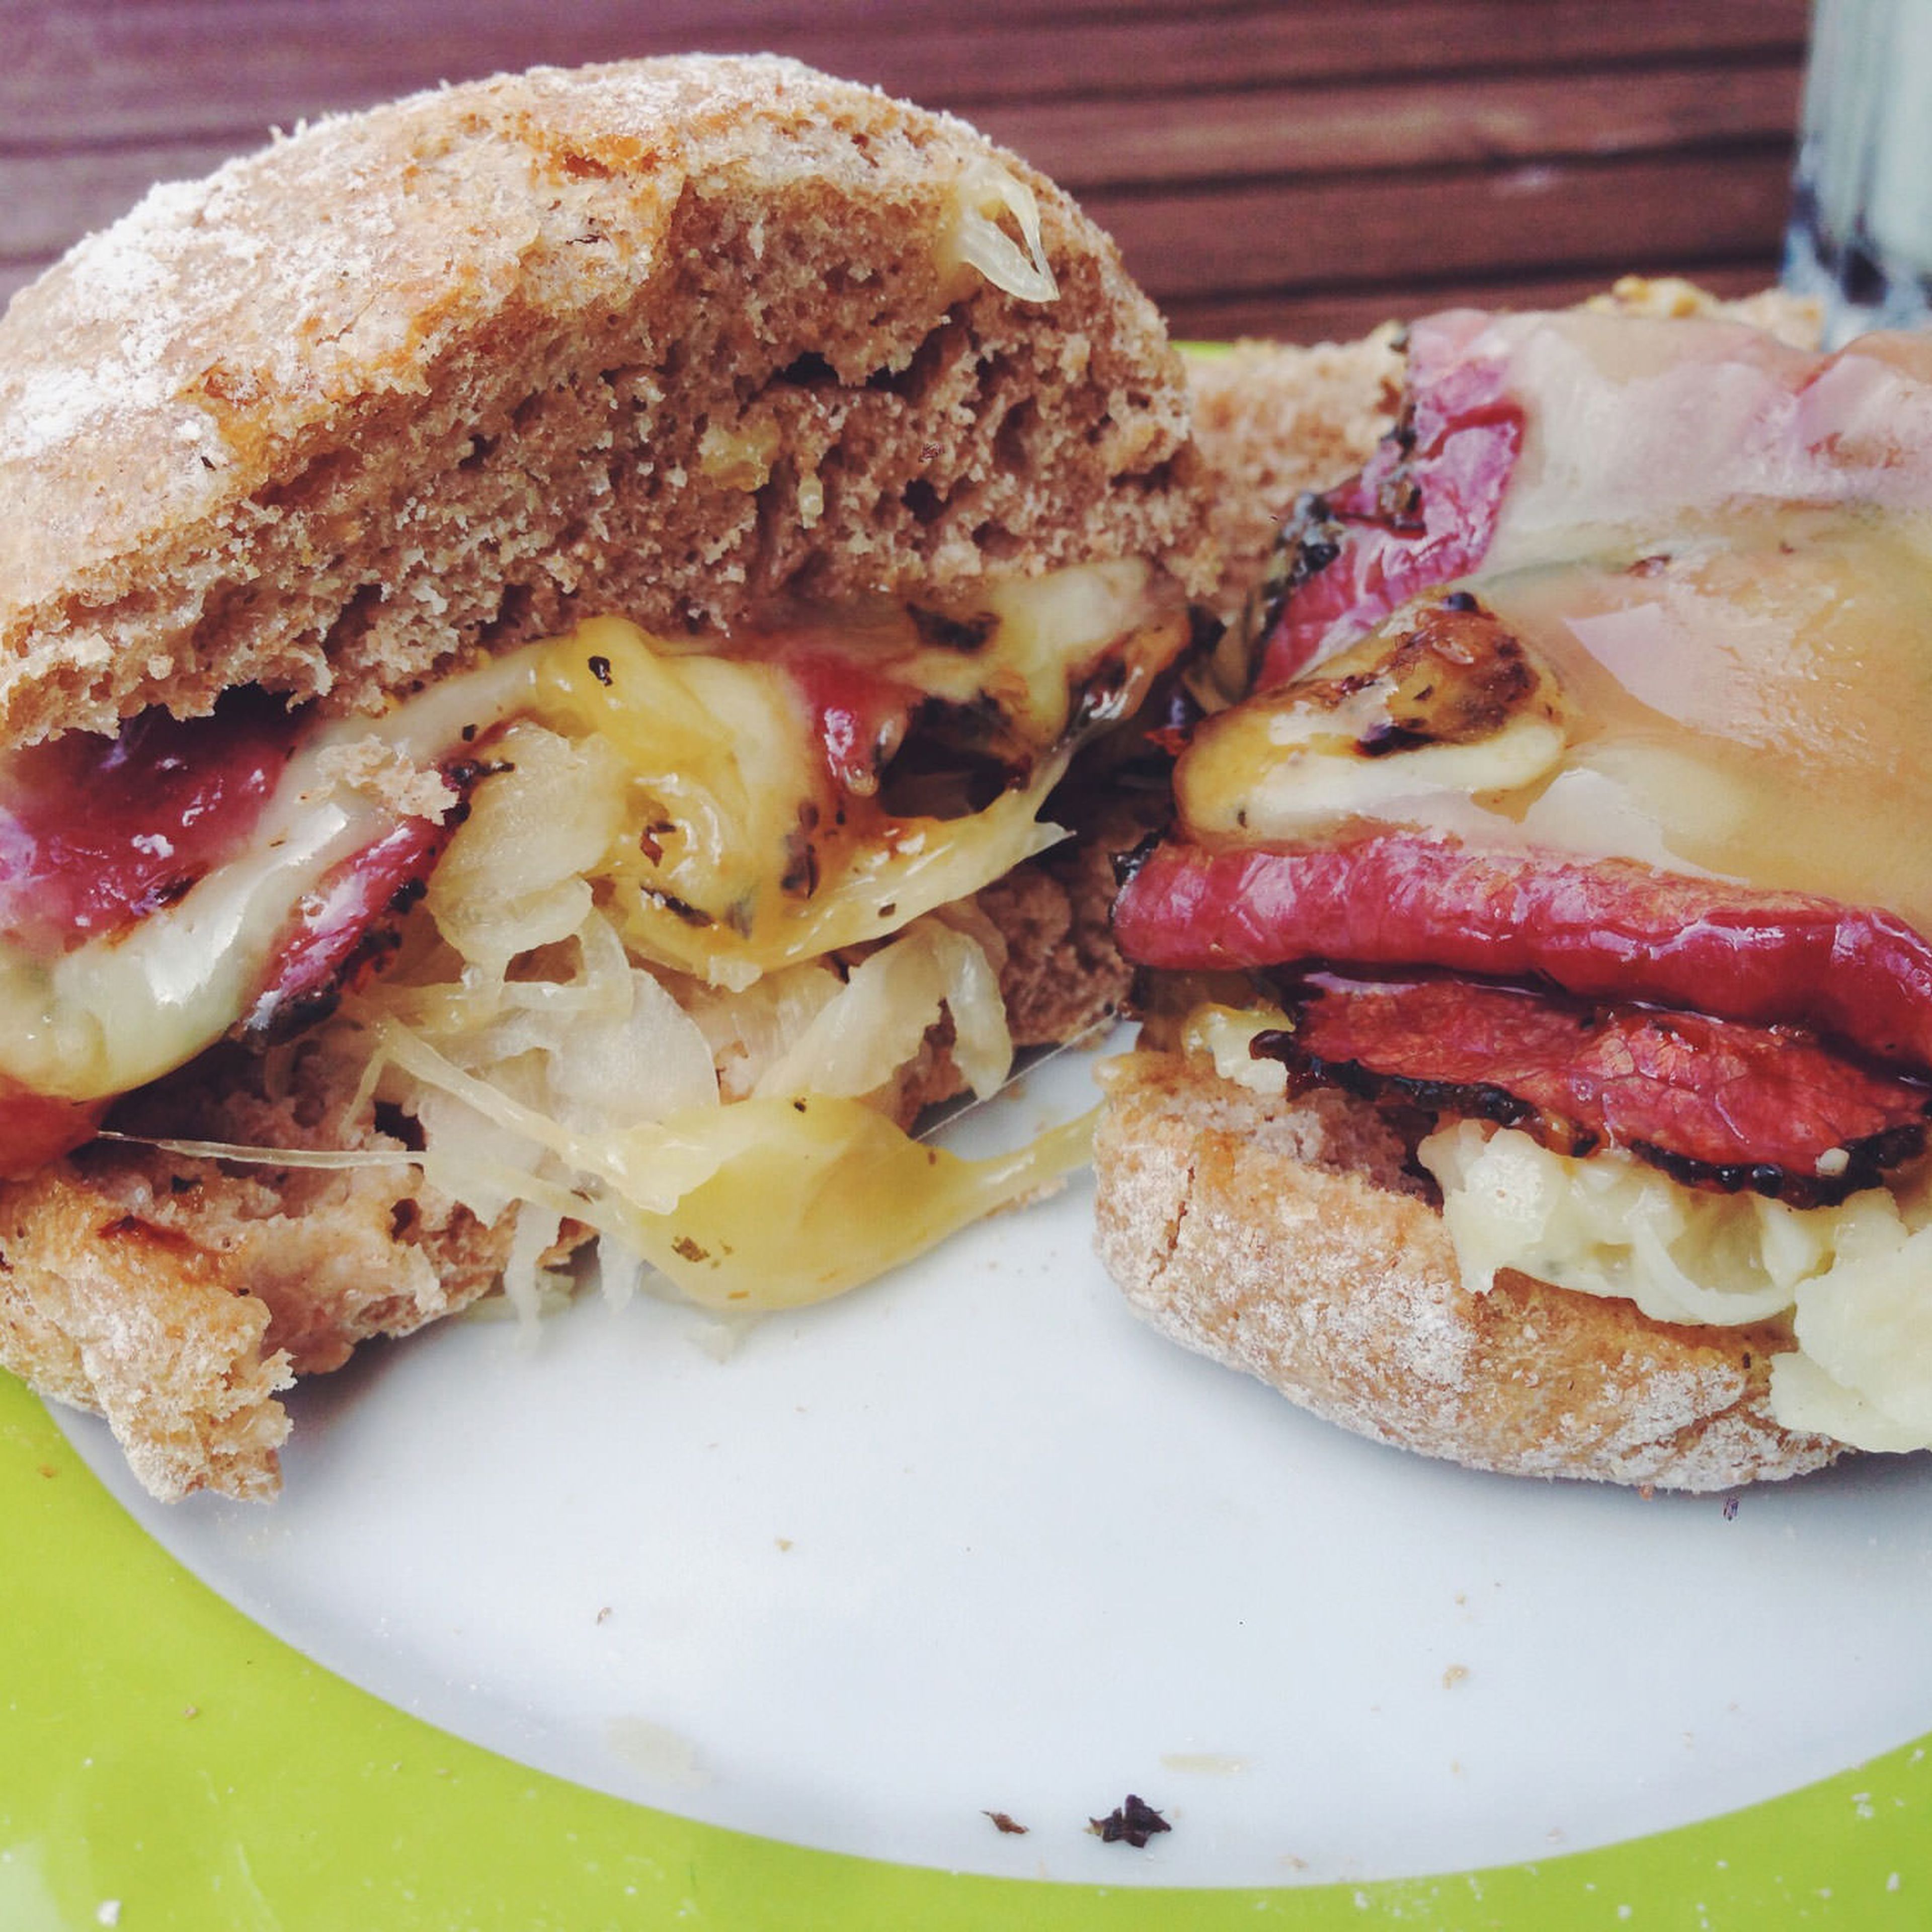 Bacon and sauerkraut cheeseburger